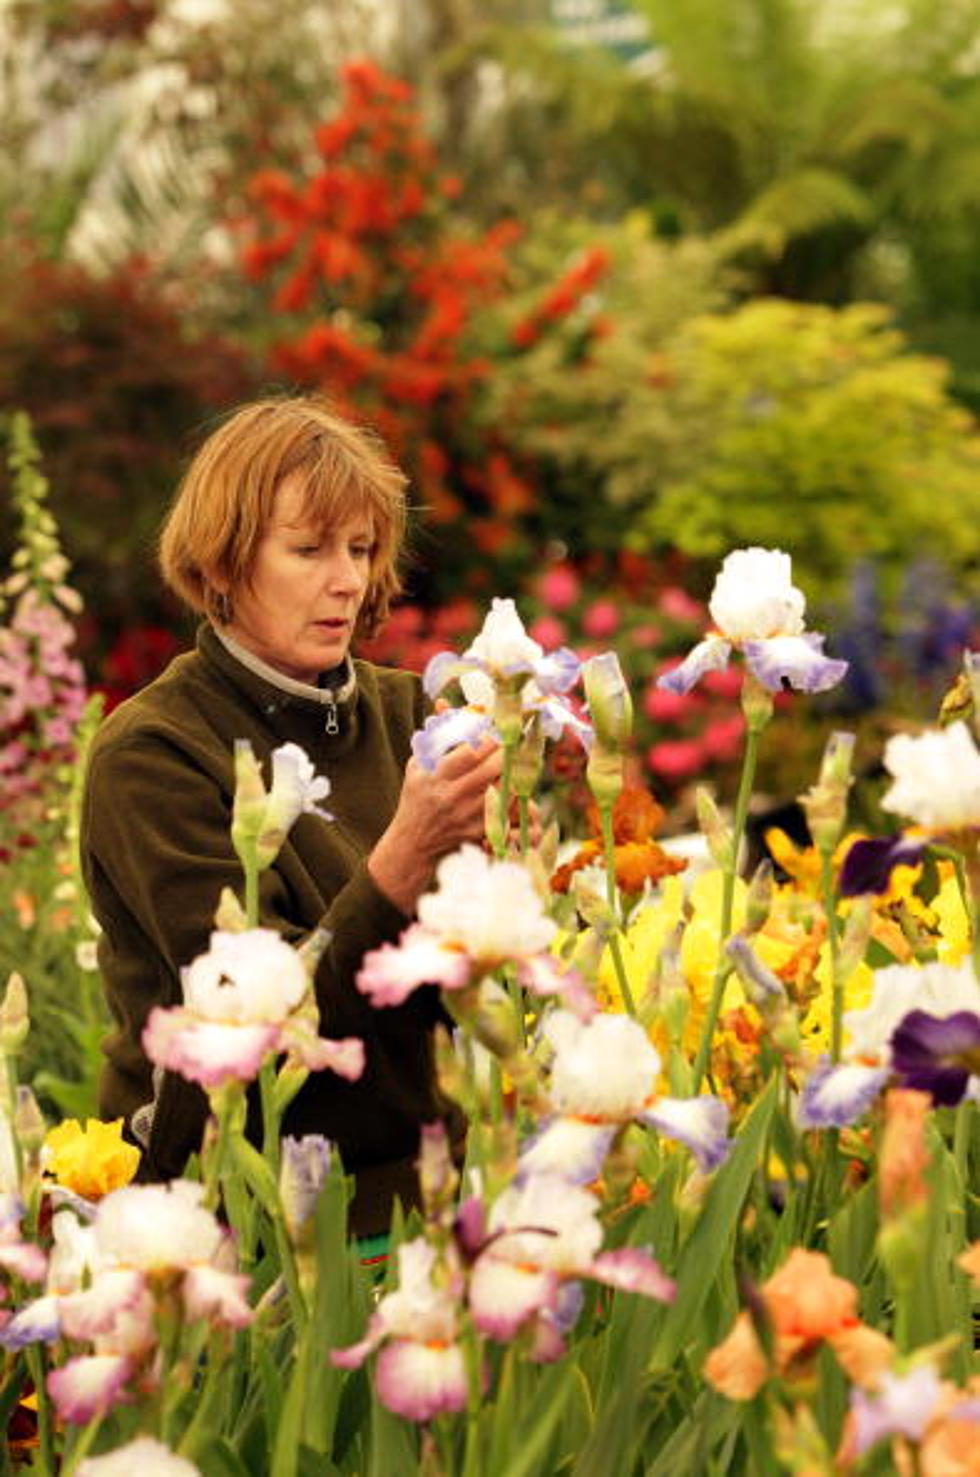 Amarillo Botanical Gardens Hosts an Iris Show